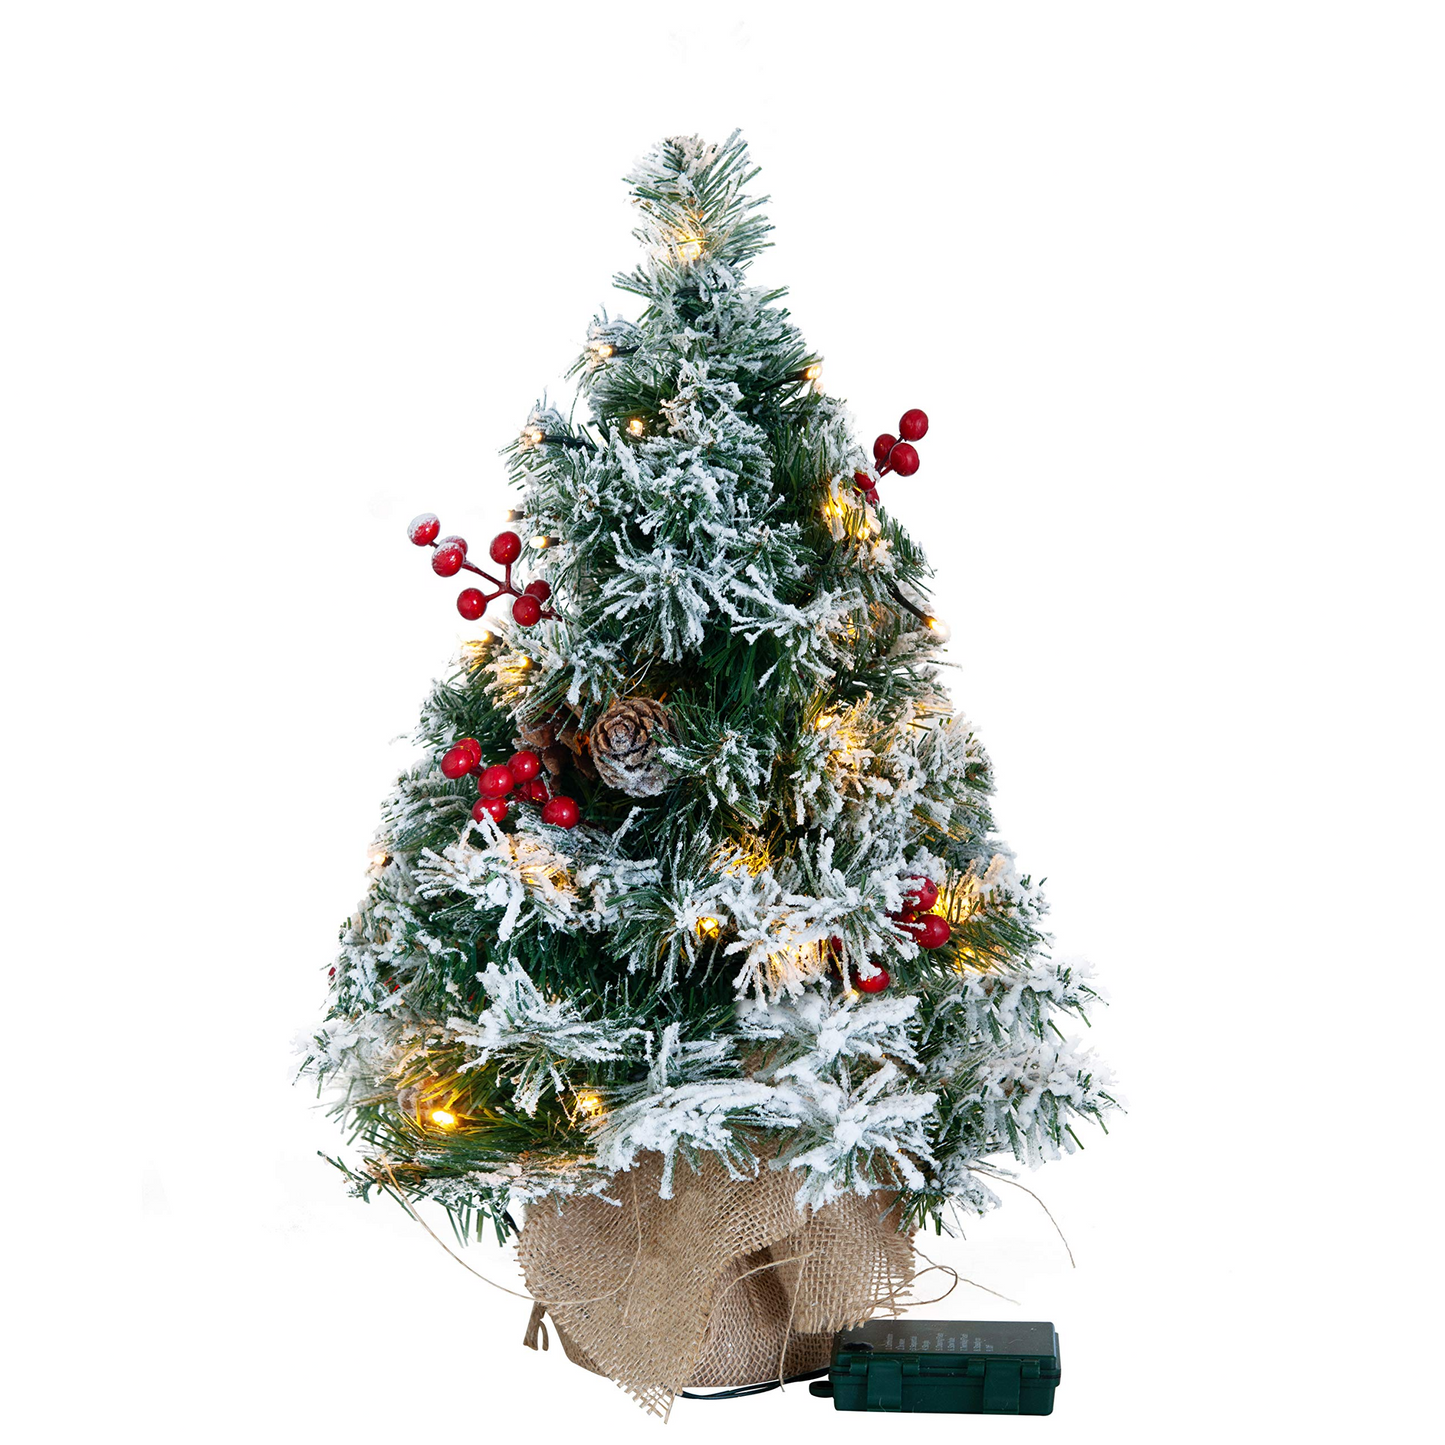 22in Snow Flocked Prelit Table-top Christmas Tree